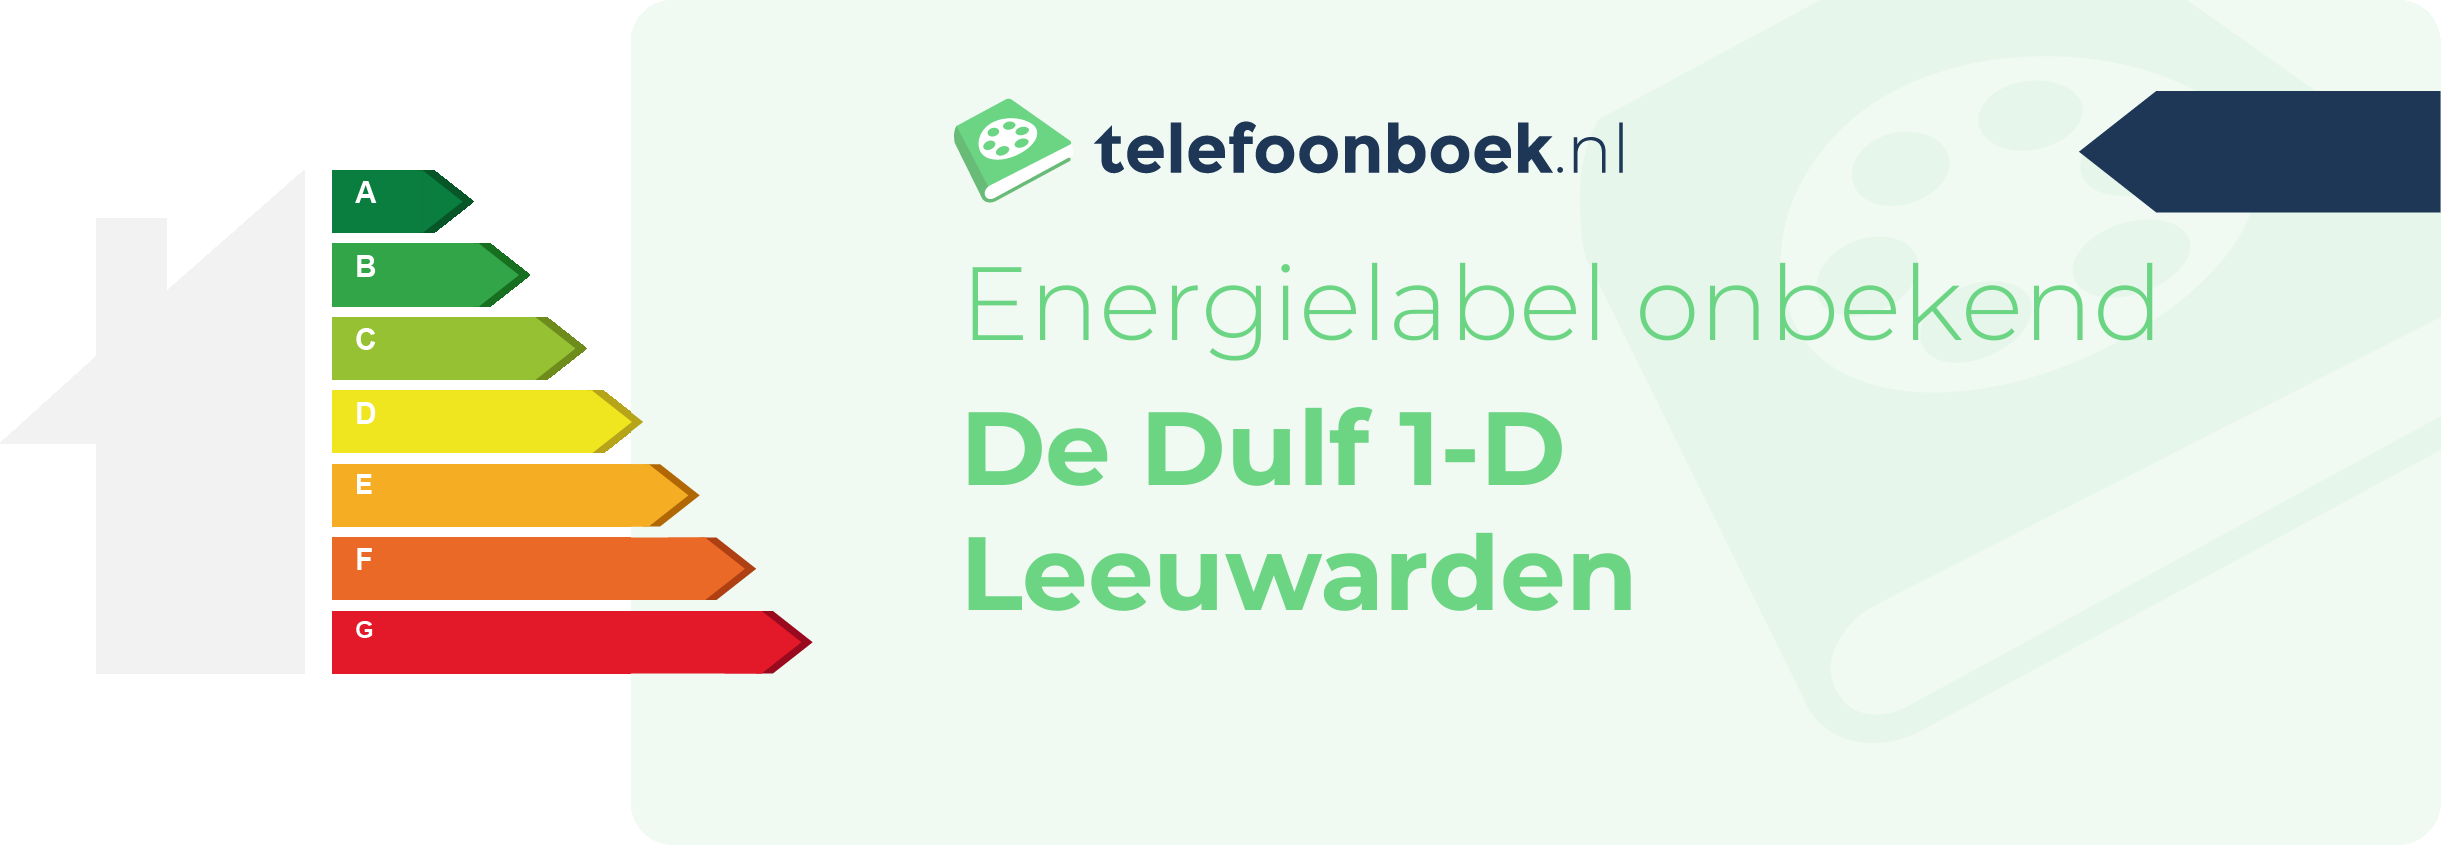 Energielabel De Dulf 1-D Leeuwarden